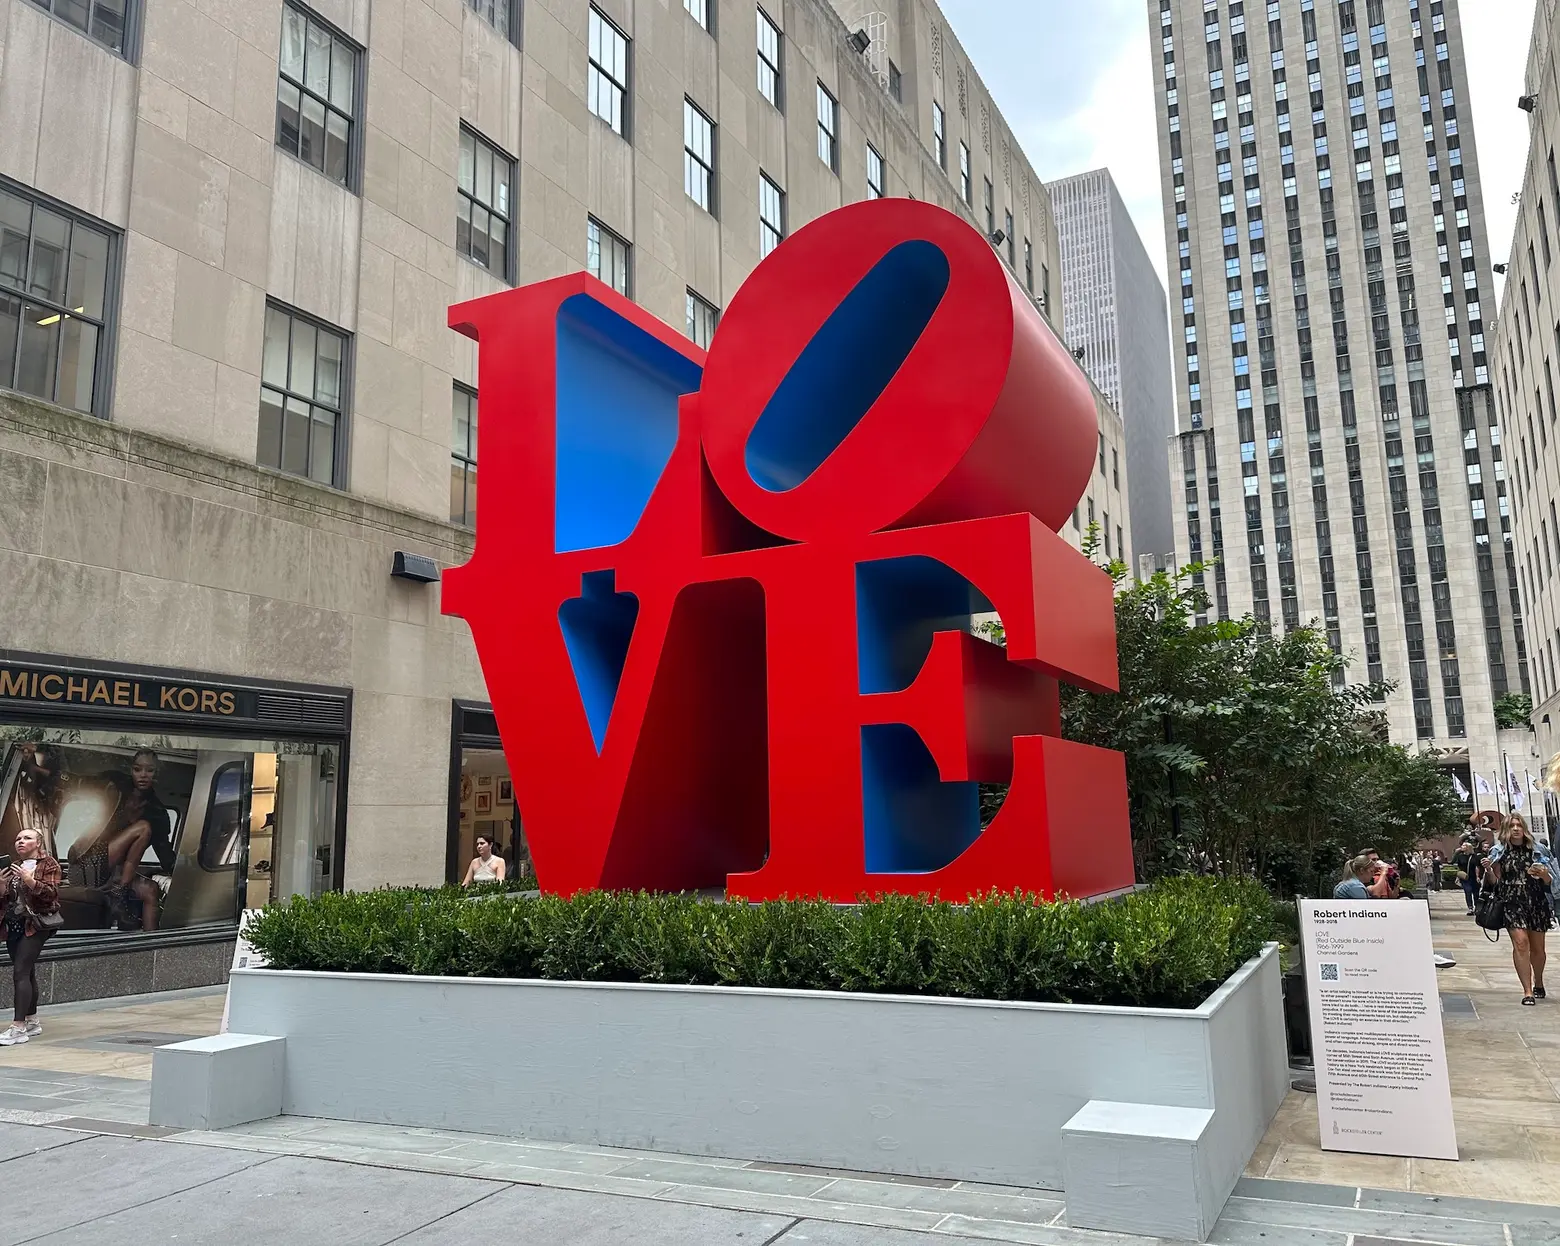 Robert Indiana’s ‘LOVE’ sculpture installed at Rockefeller Center